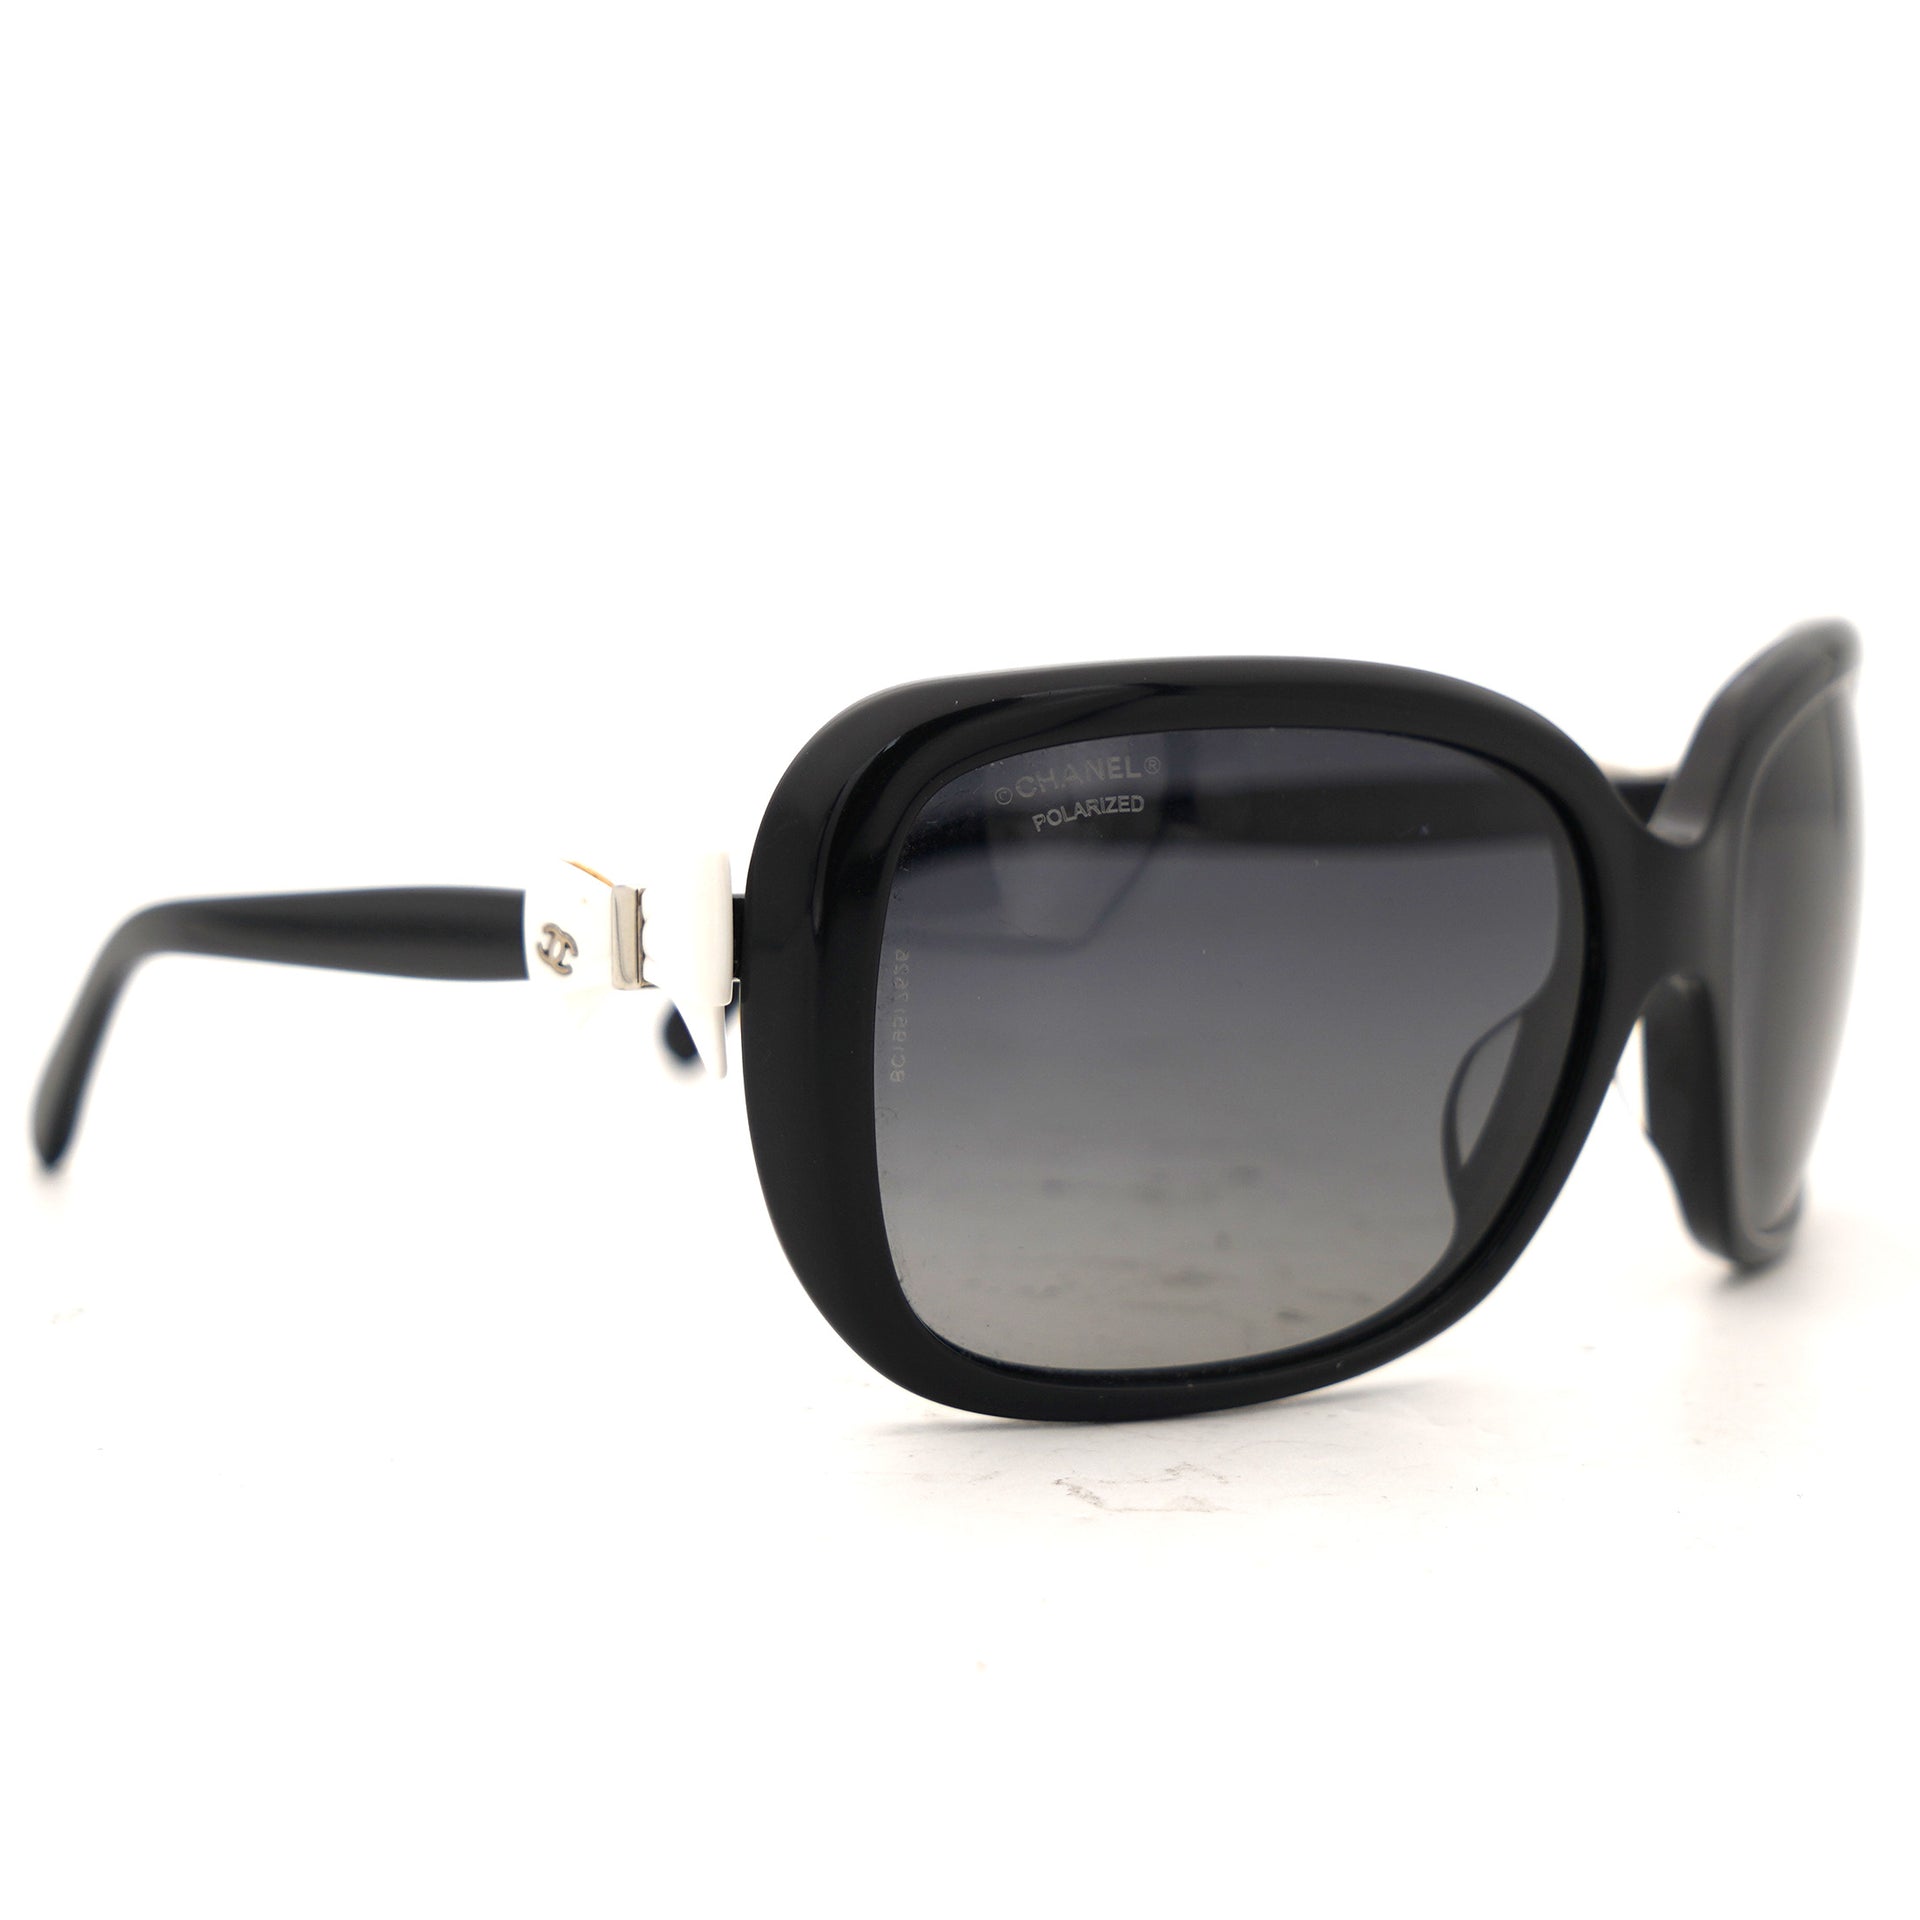 Black Polarized Bow Square Gradient Sunglasses